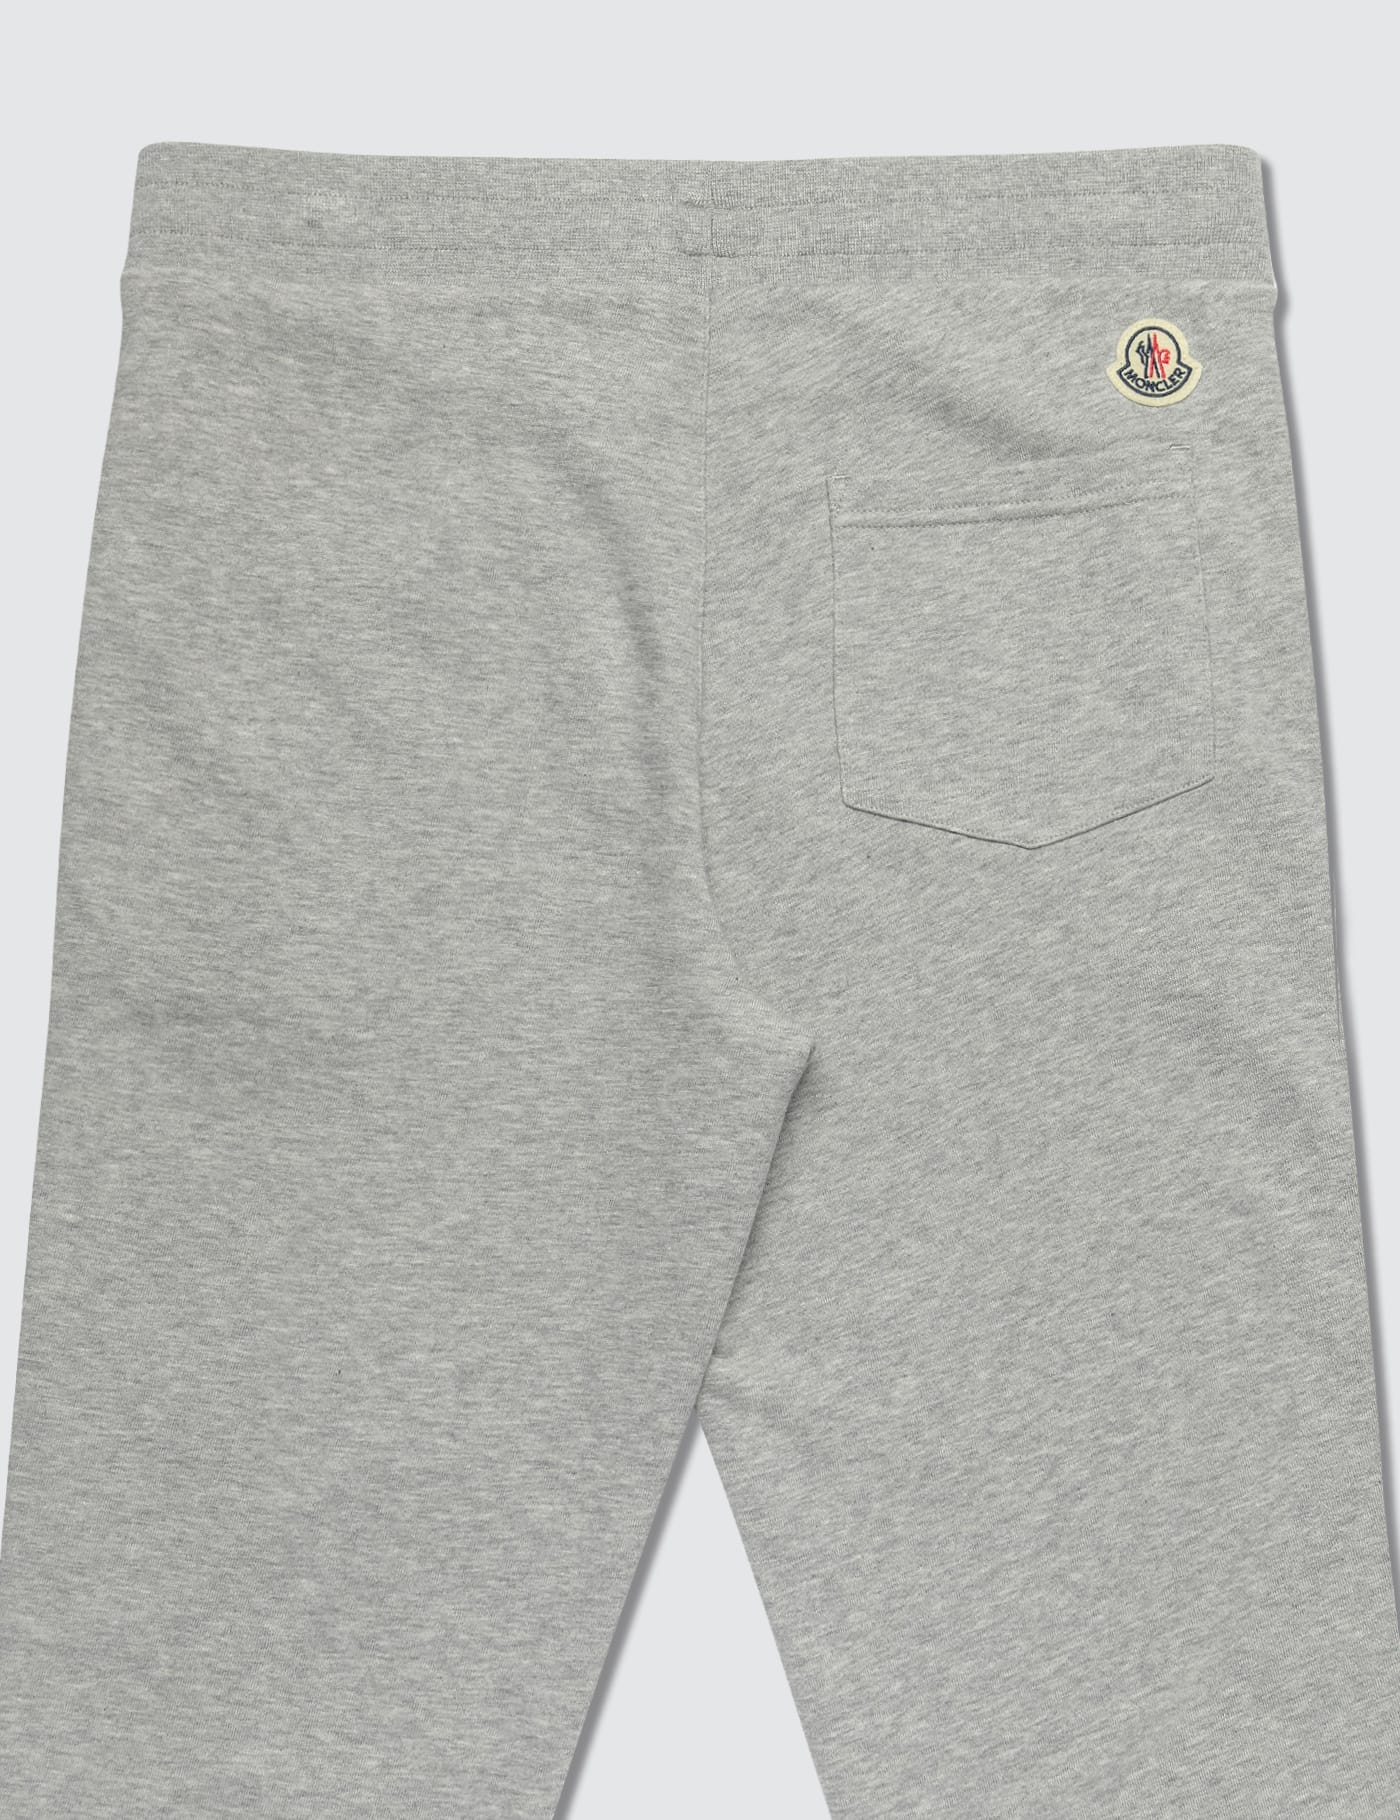 moncler track pants grey